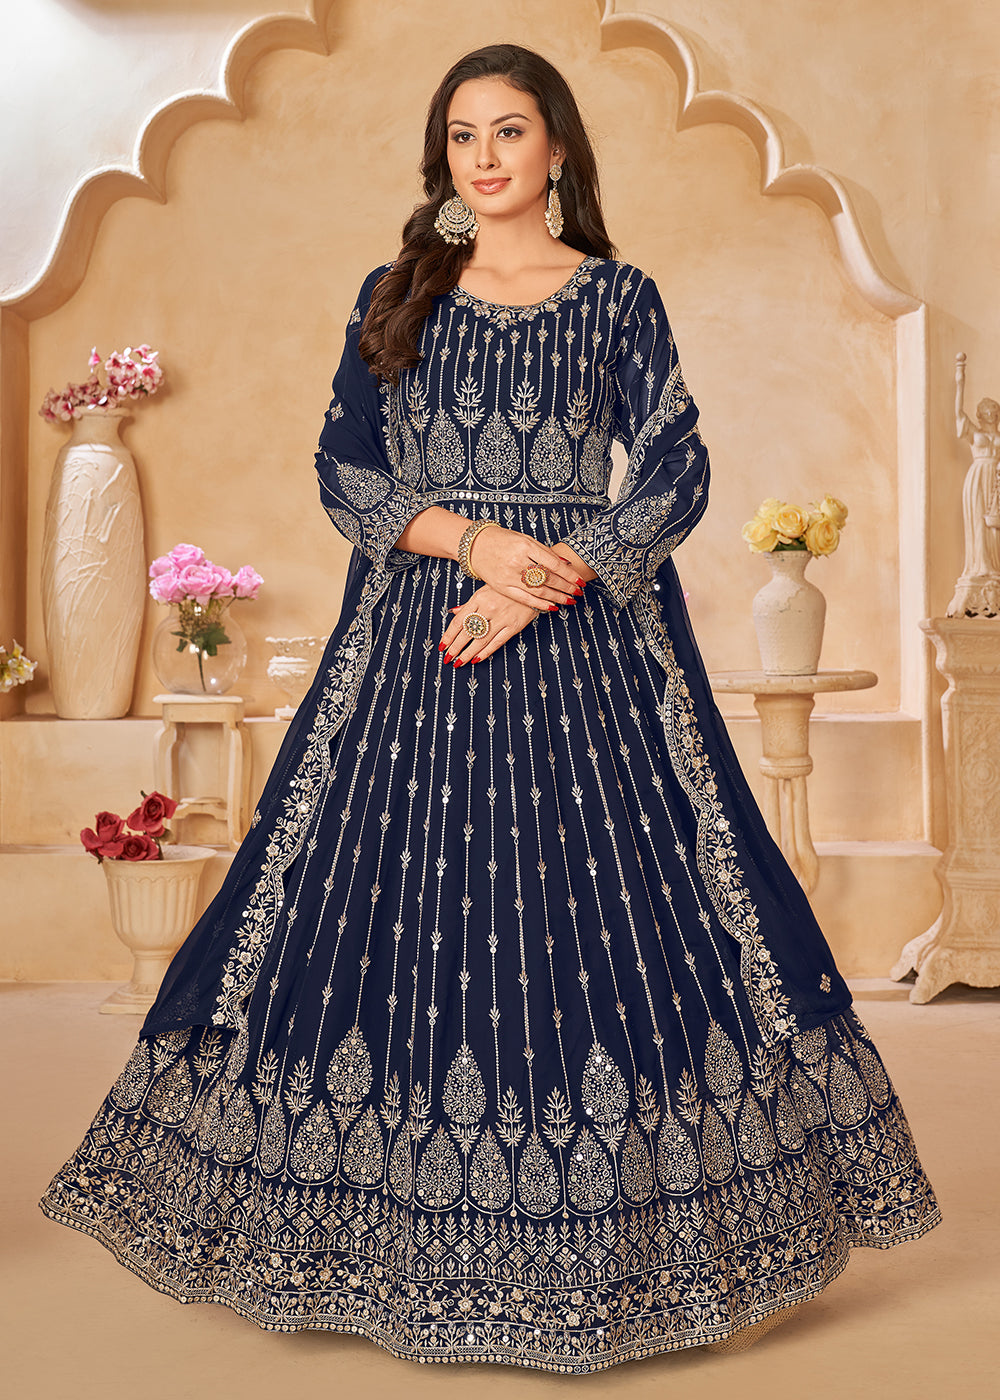 Buy Now Navy Blue Resham Zari Embroidered Festive Anarkali Suit Online in USA, UK, Australia, New Zealand, Canada & Worldwide at Empress Clothing.